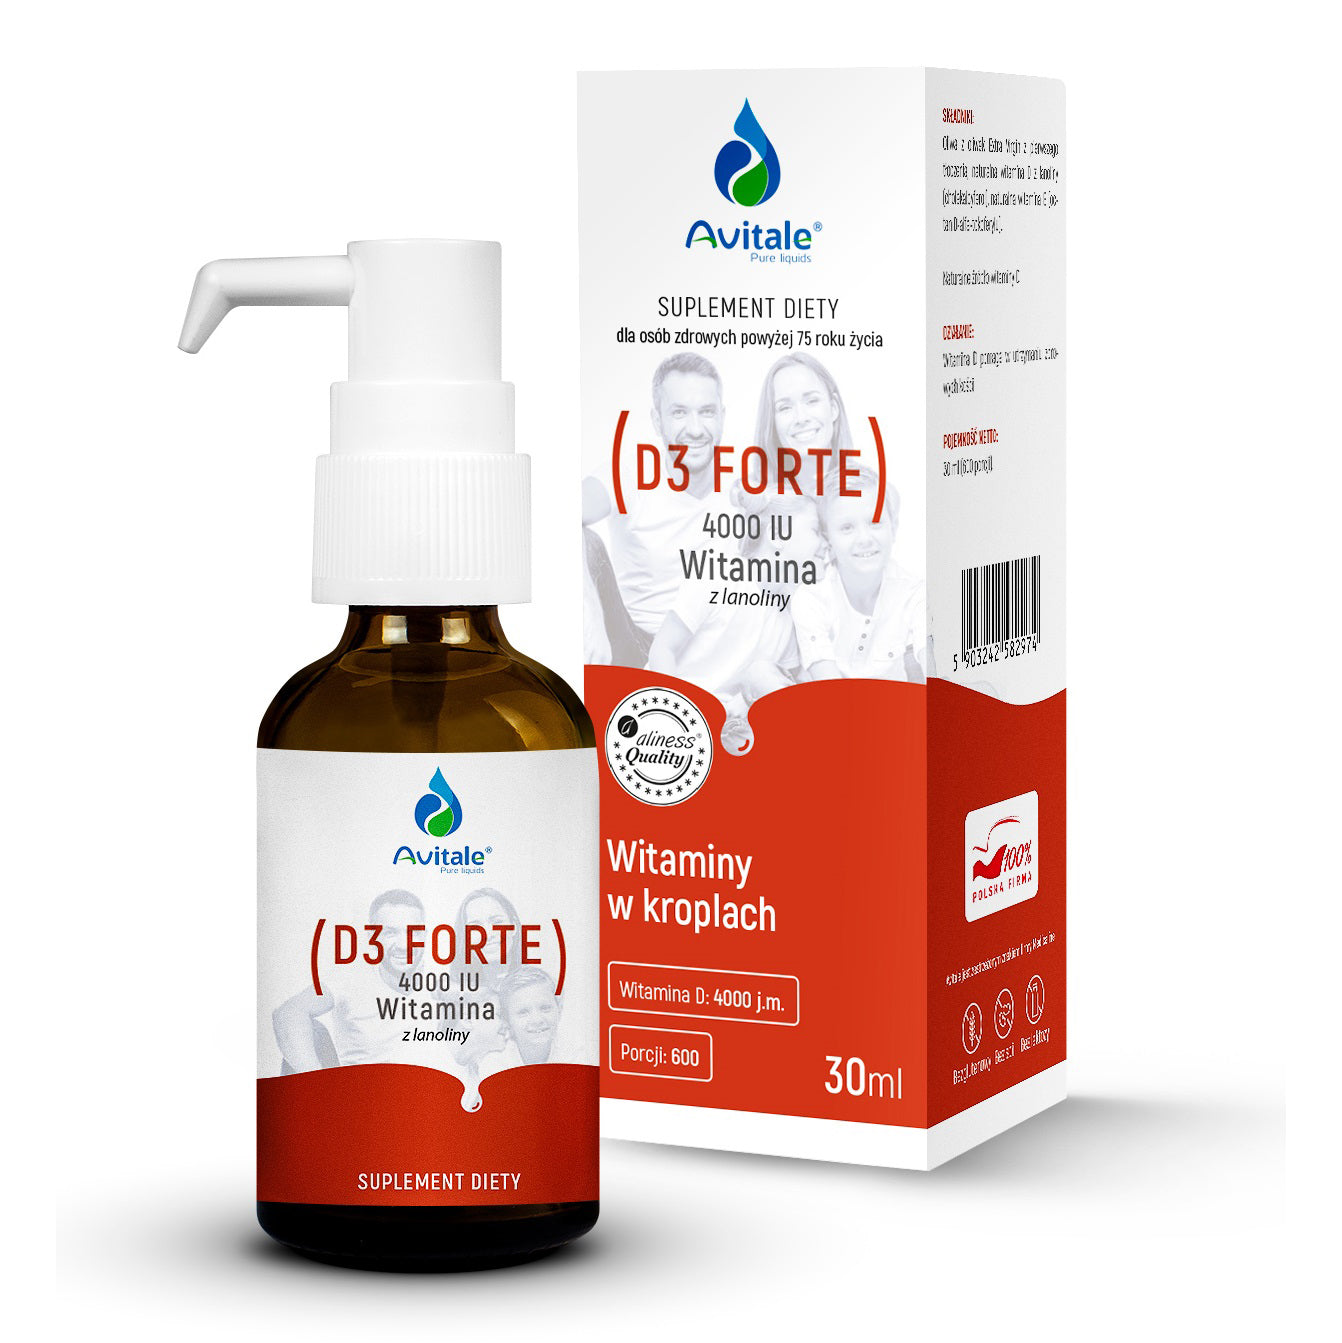 Avitale D3 FORTE 4000 IU, 30 ml (600 servings), liquid vitamin in drops